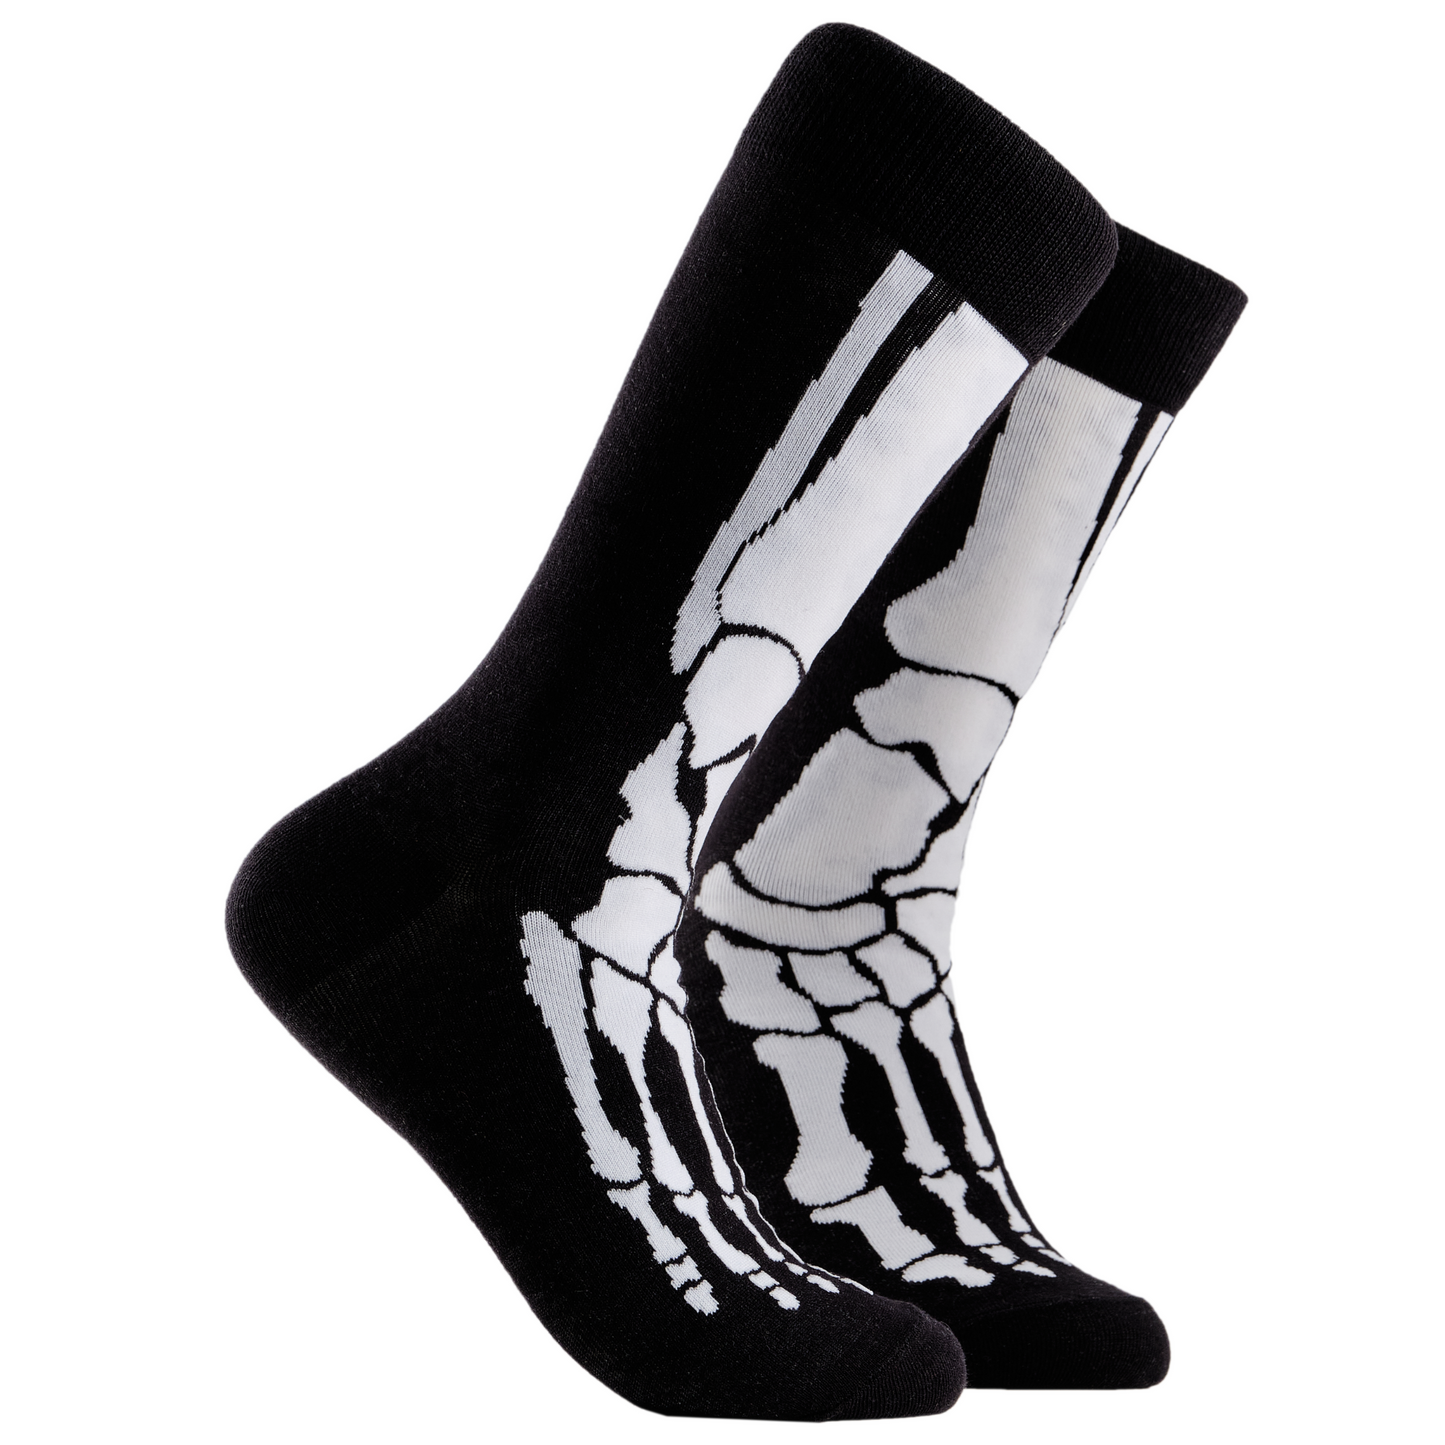 Skeleton Socks - X-Ray Vision. A pair of socks depicting skeleton feet. Black and White legs, black cuff, heel and toe.